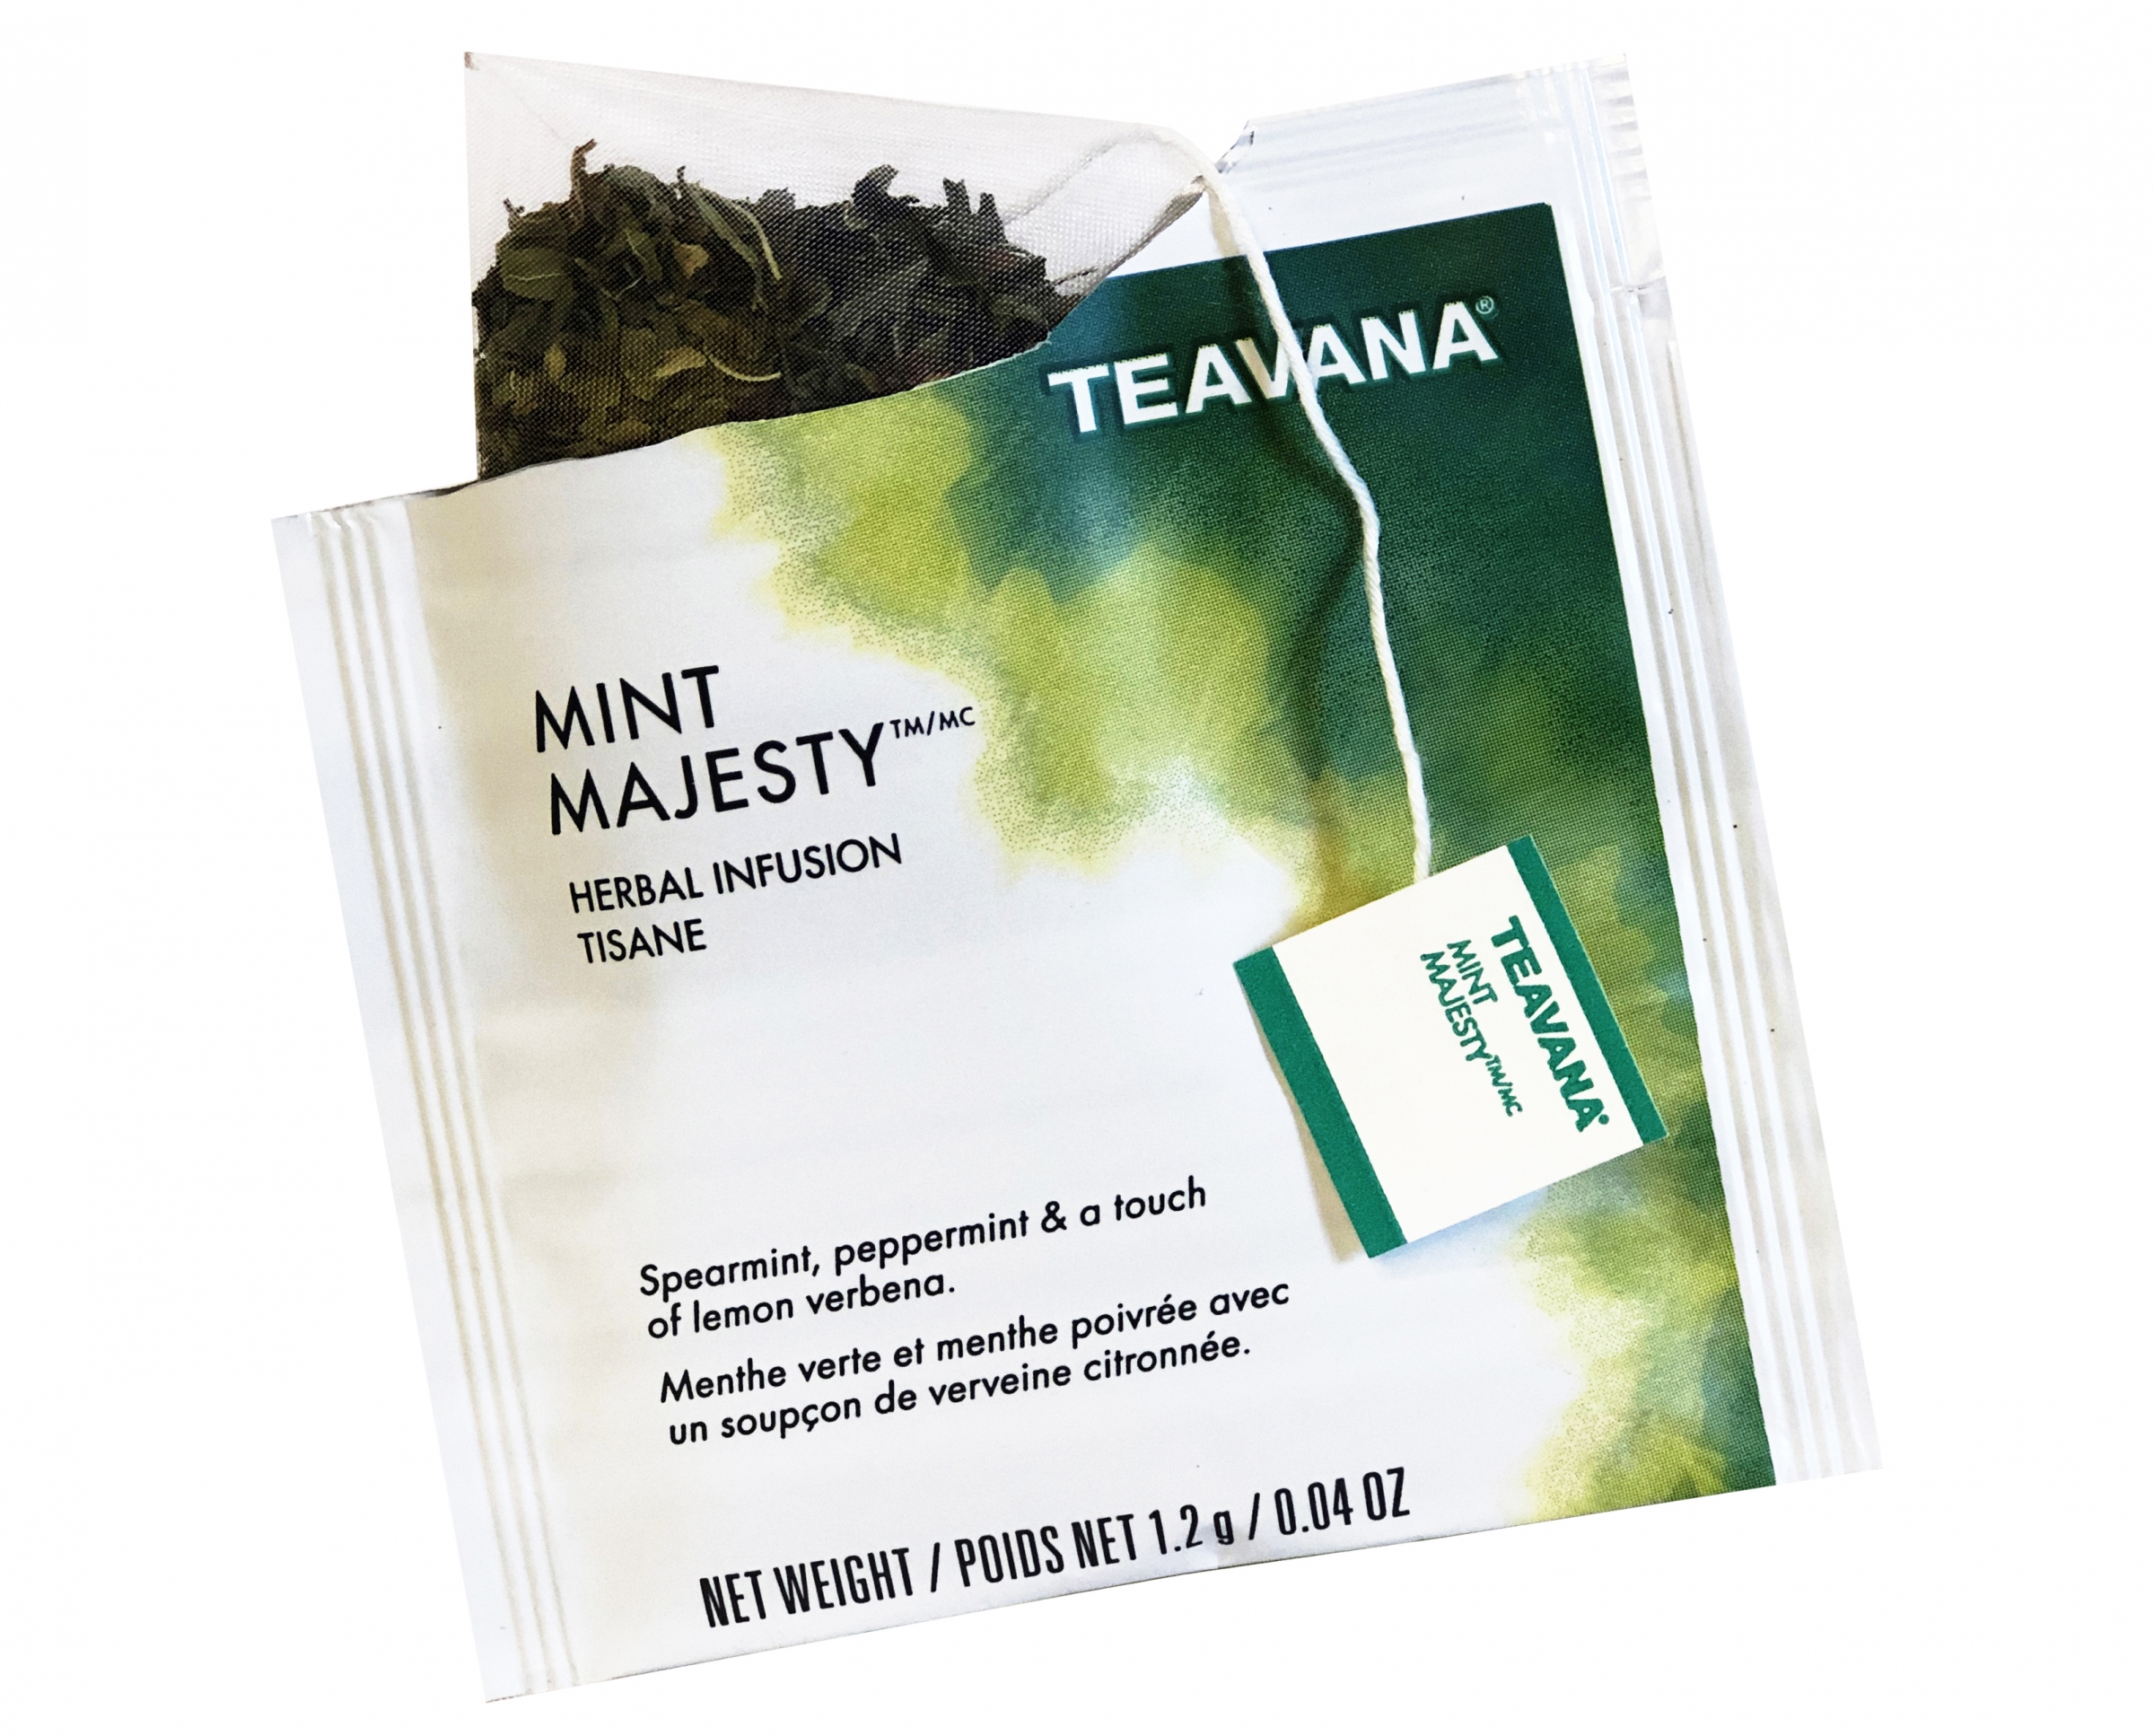 Mint Majesty Tea From Starbucks